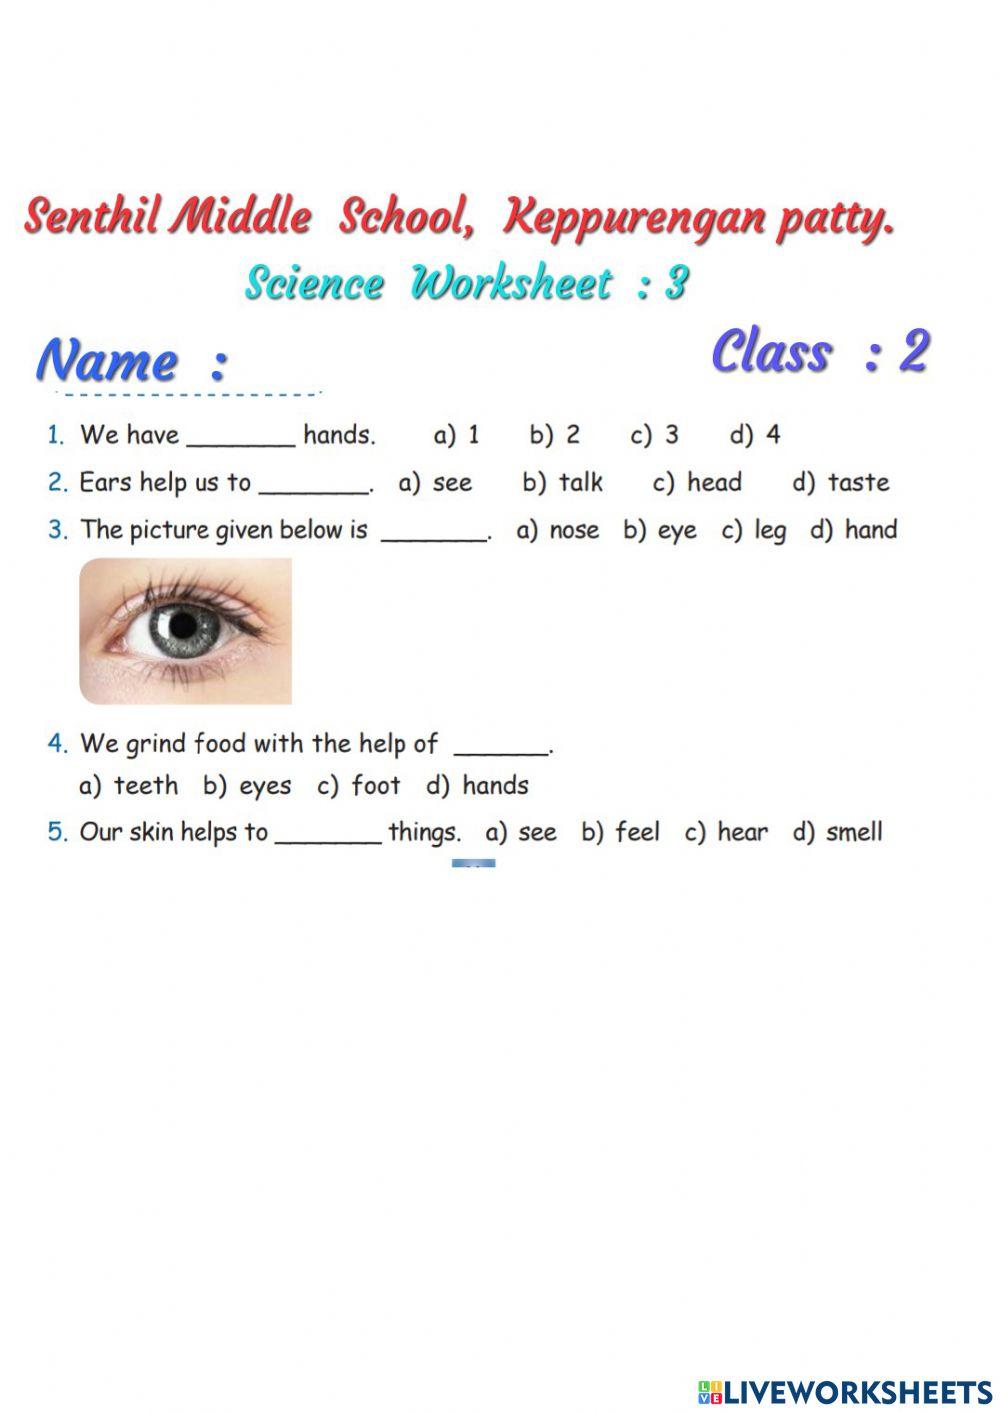 Senthil middle school, keppirengan patty, class:2 science -prepared by, r.kumanan, sec.gr.tr